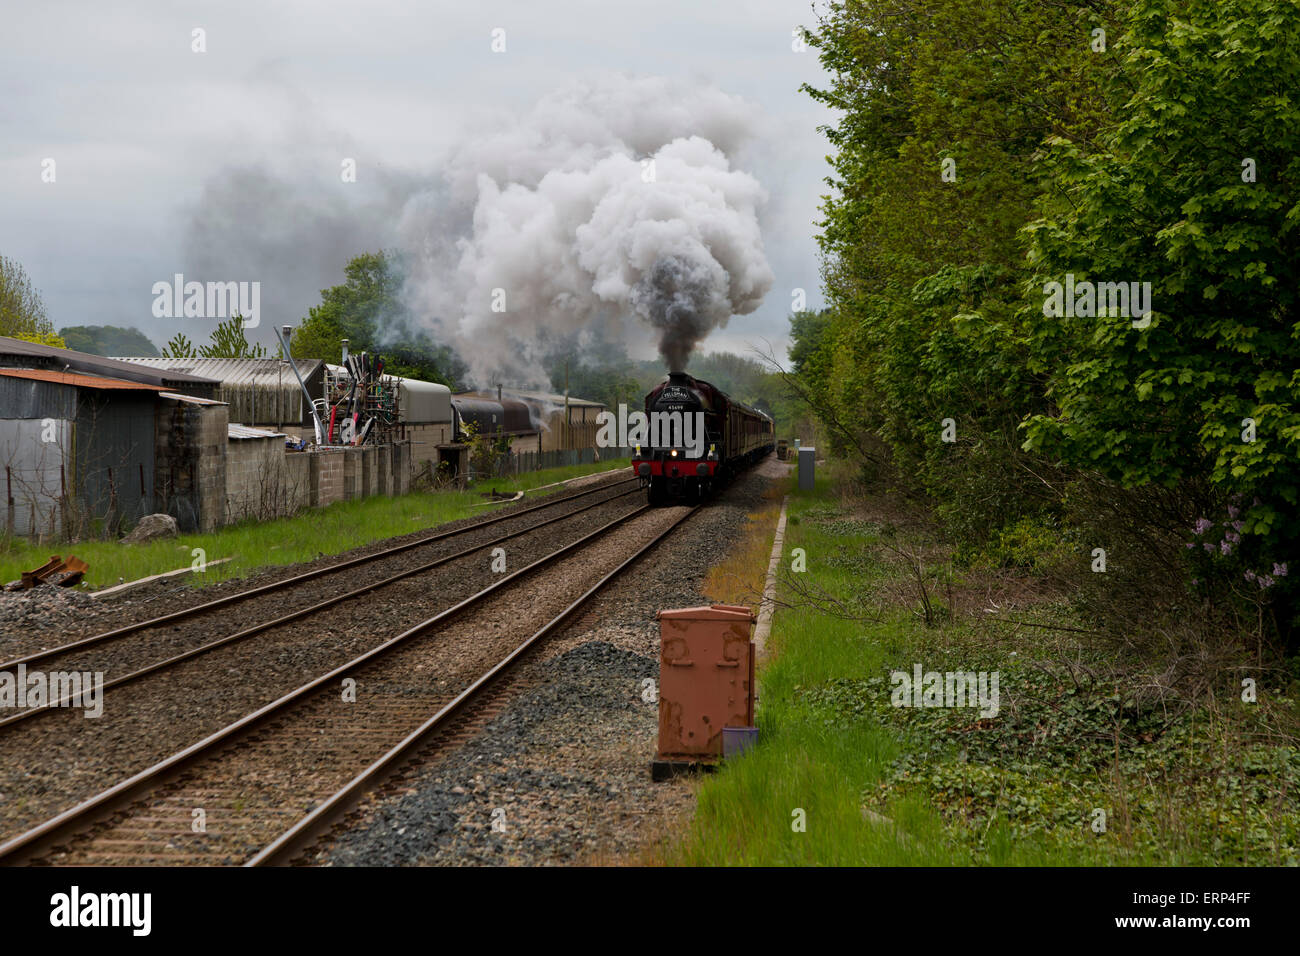 El tren de vapor Settle-Carlisle Fellsman.LMS Jubileo clase "Galatea" nº 45699 Foto de stock